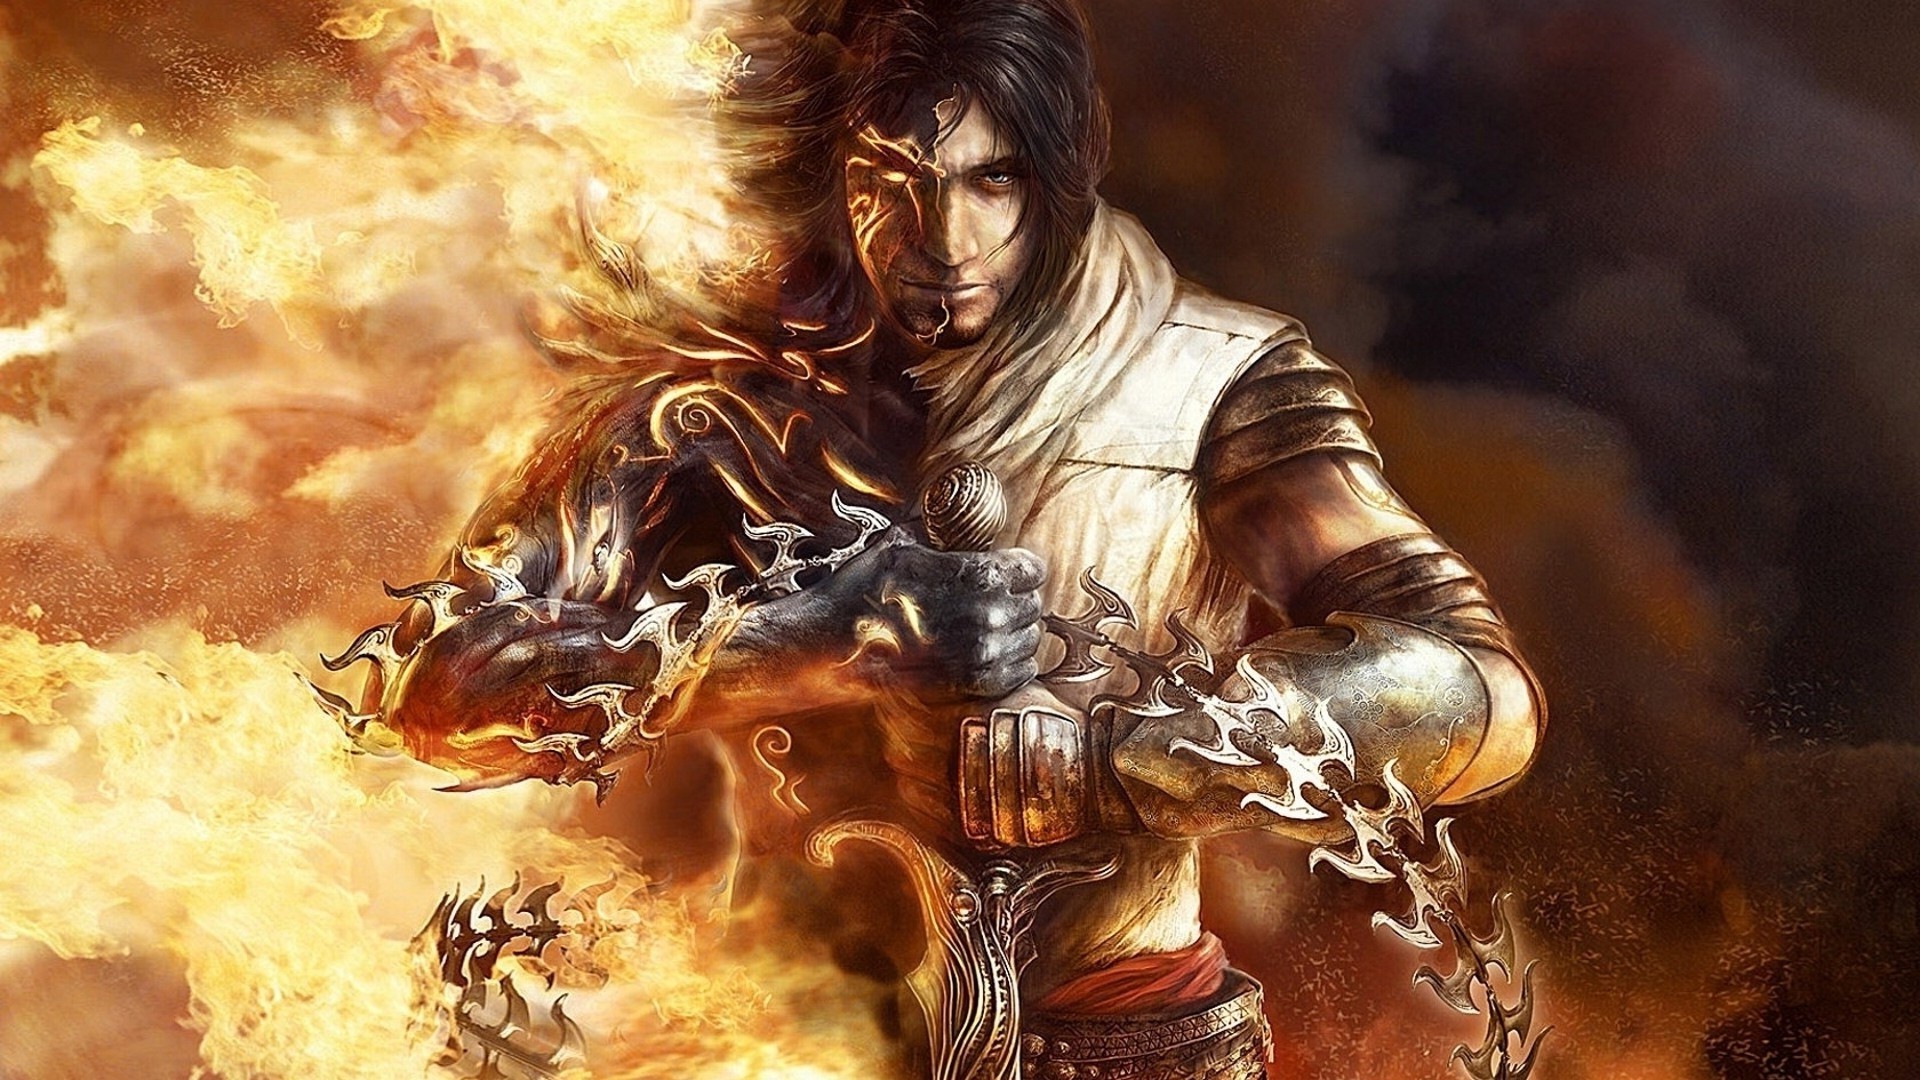 Fantasy Art Heroes Men Sword Fire Armor Prince Of